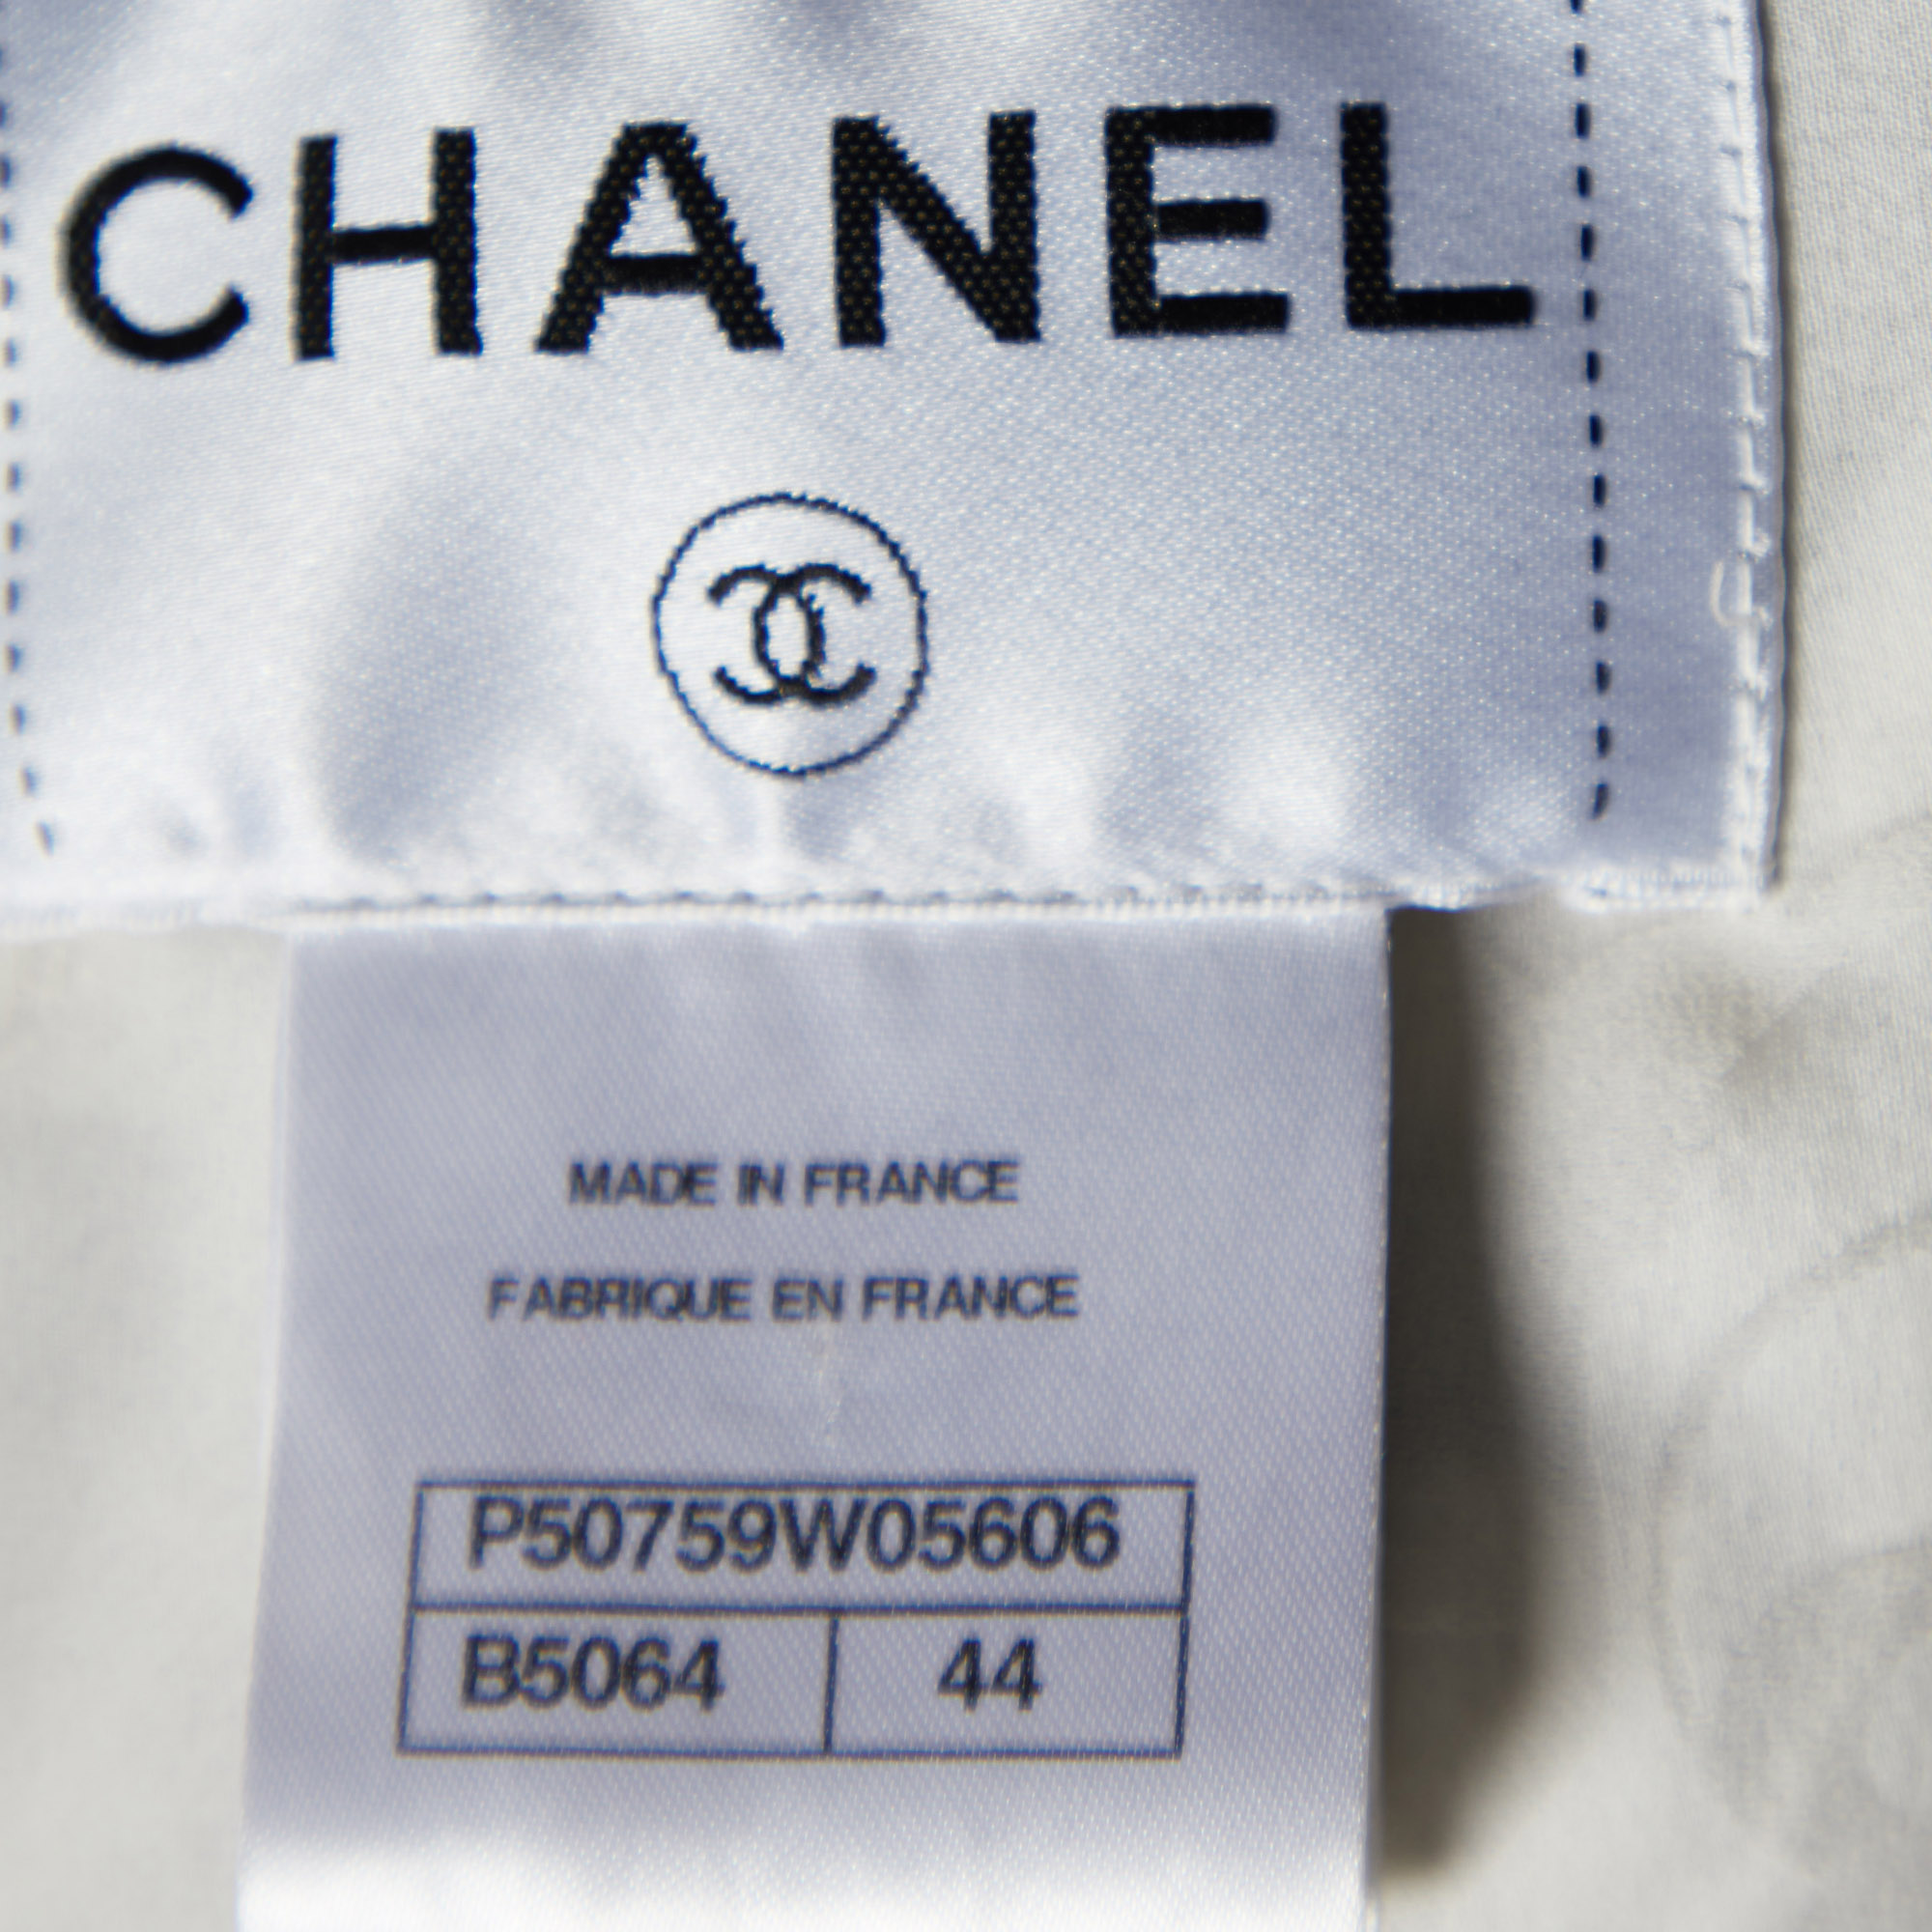 Chanel Black/White Patterned Jacquard Holographic Swing Jacket L